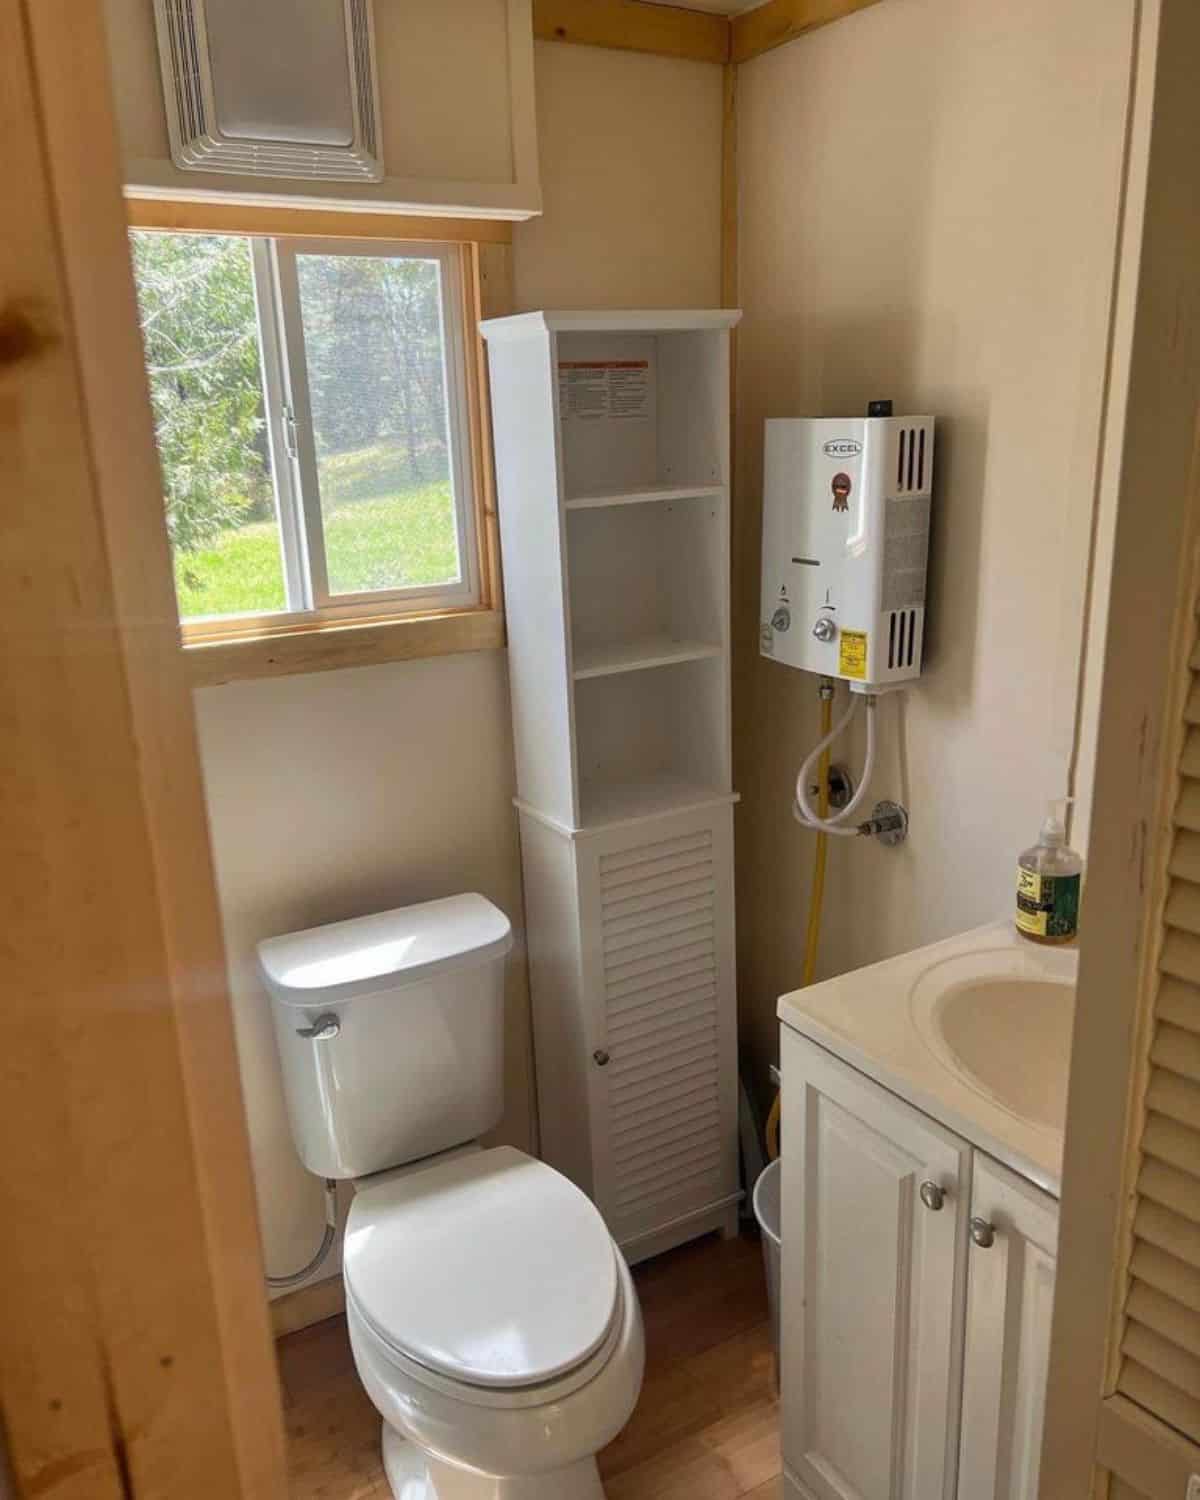 standard toilet in bathroom of 30’ budget dwelling